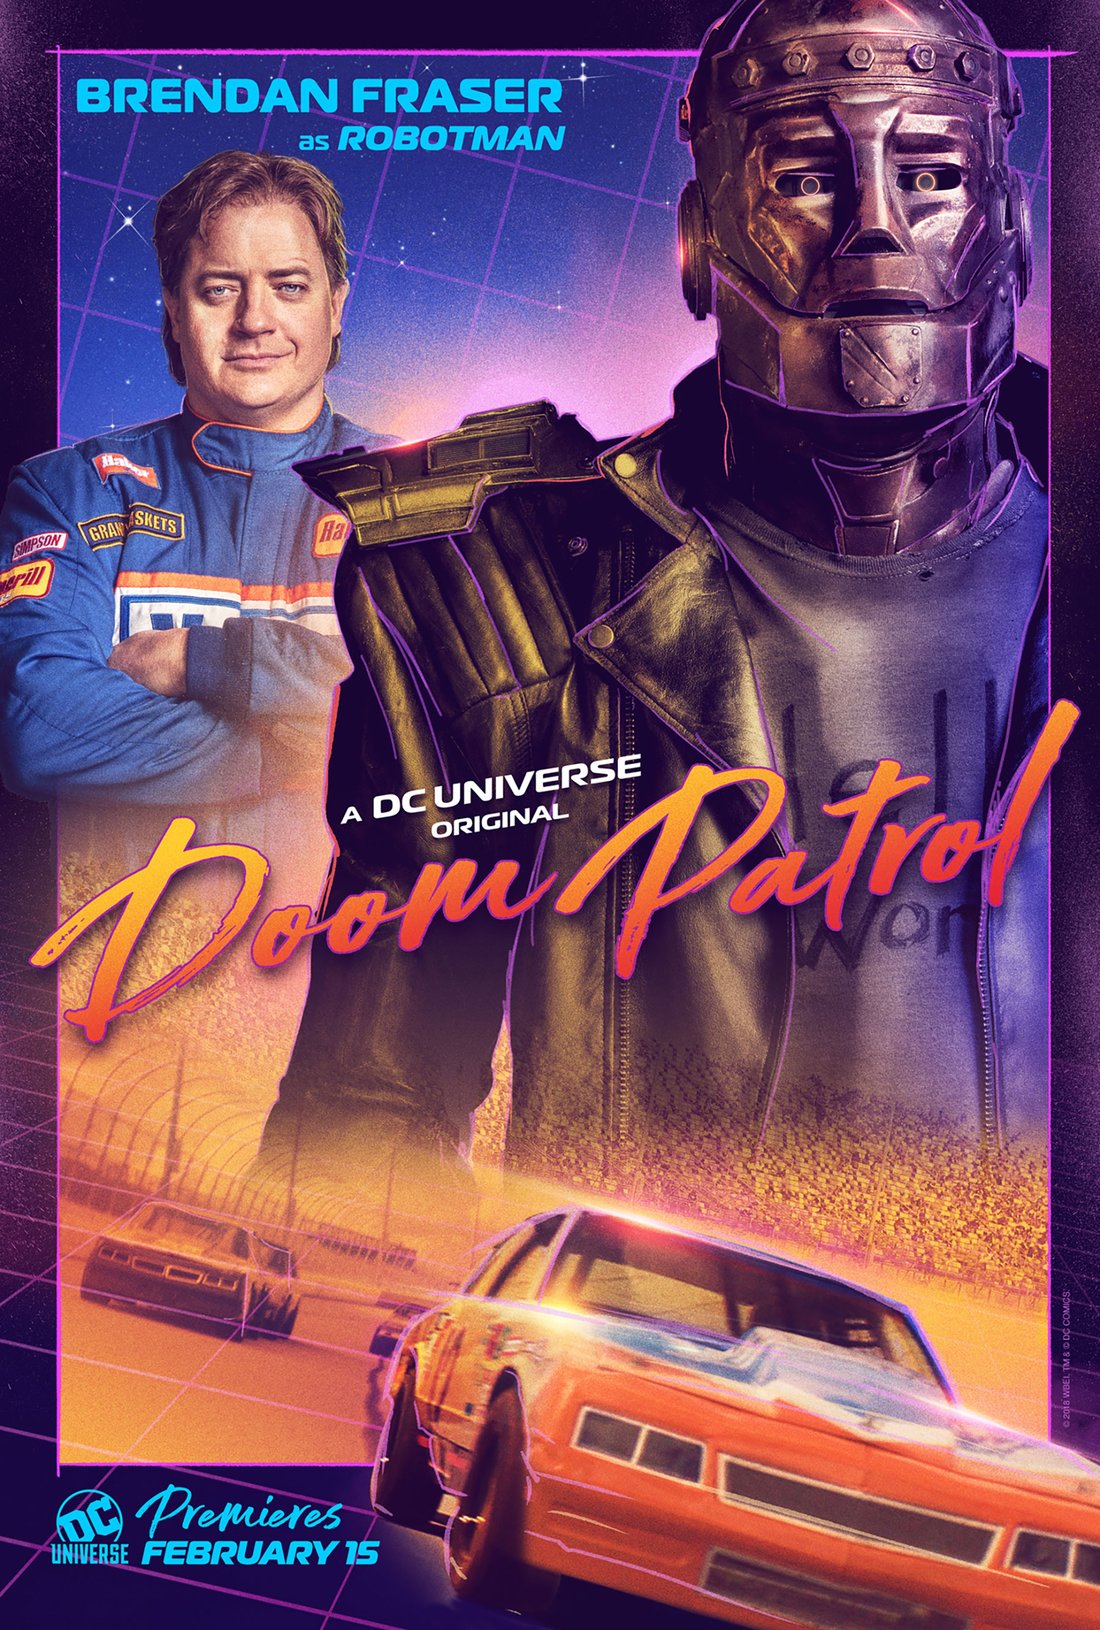 Doom Patrol posters
CR: DC Universe